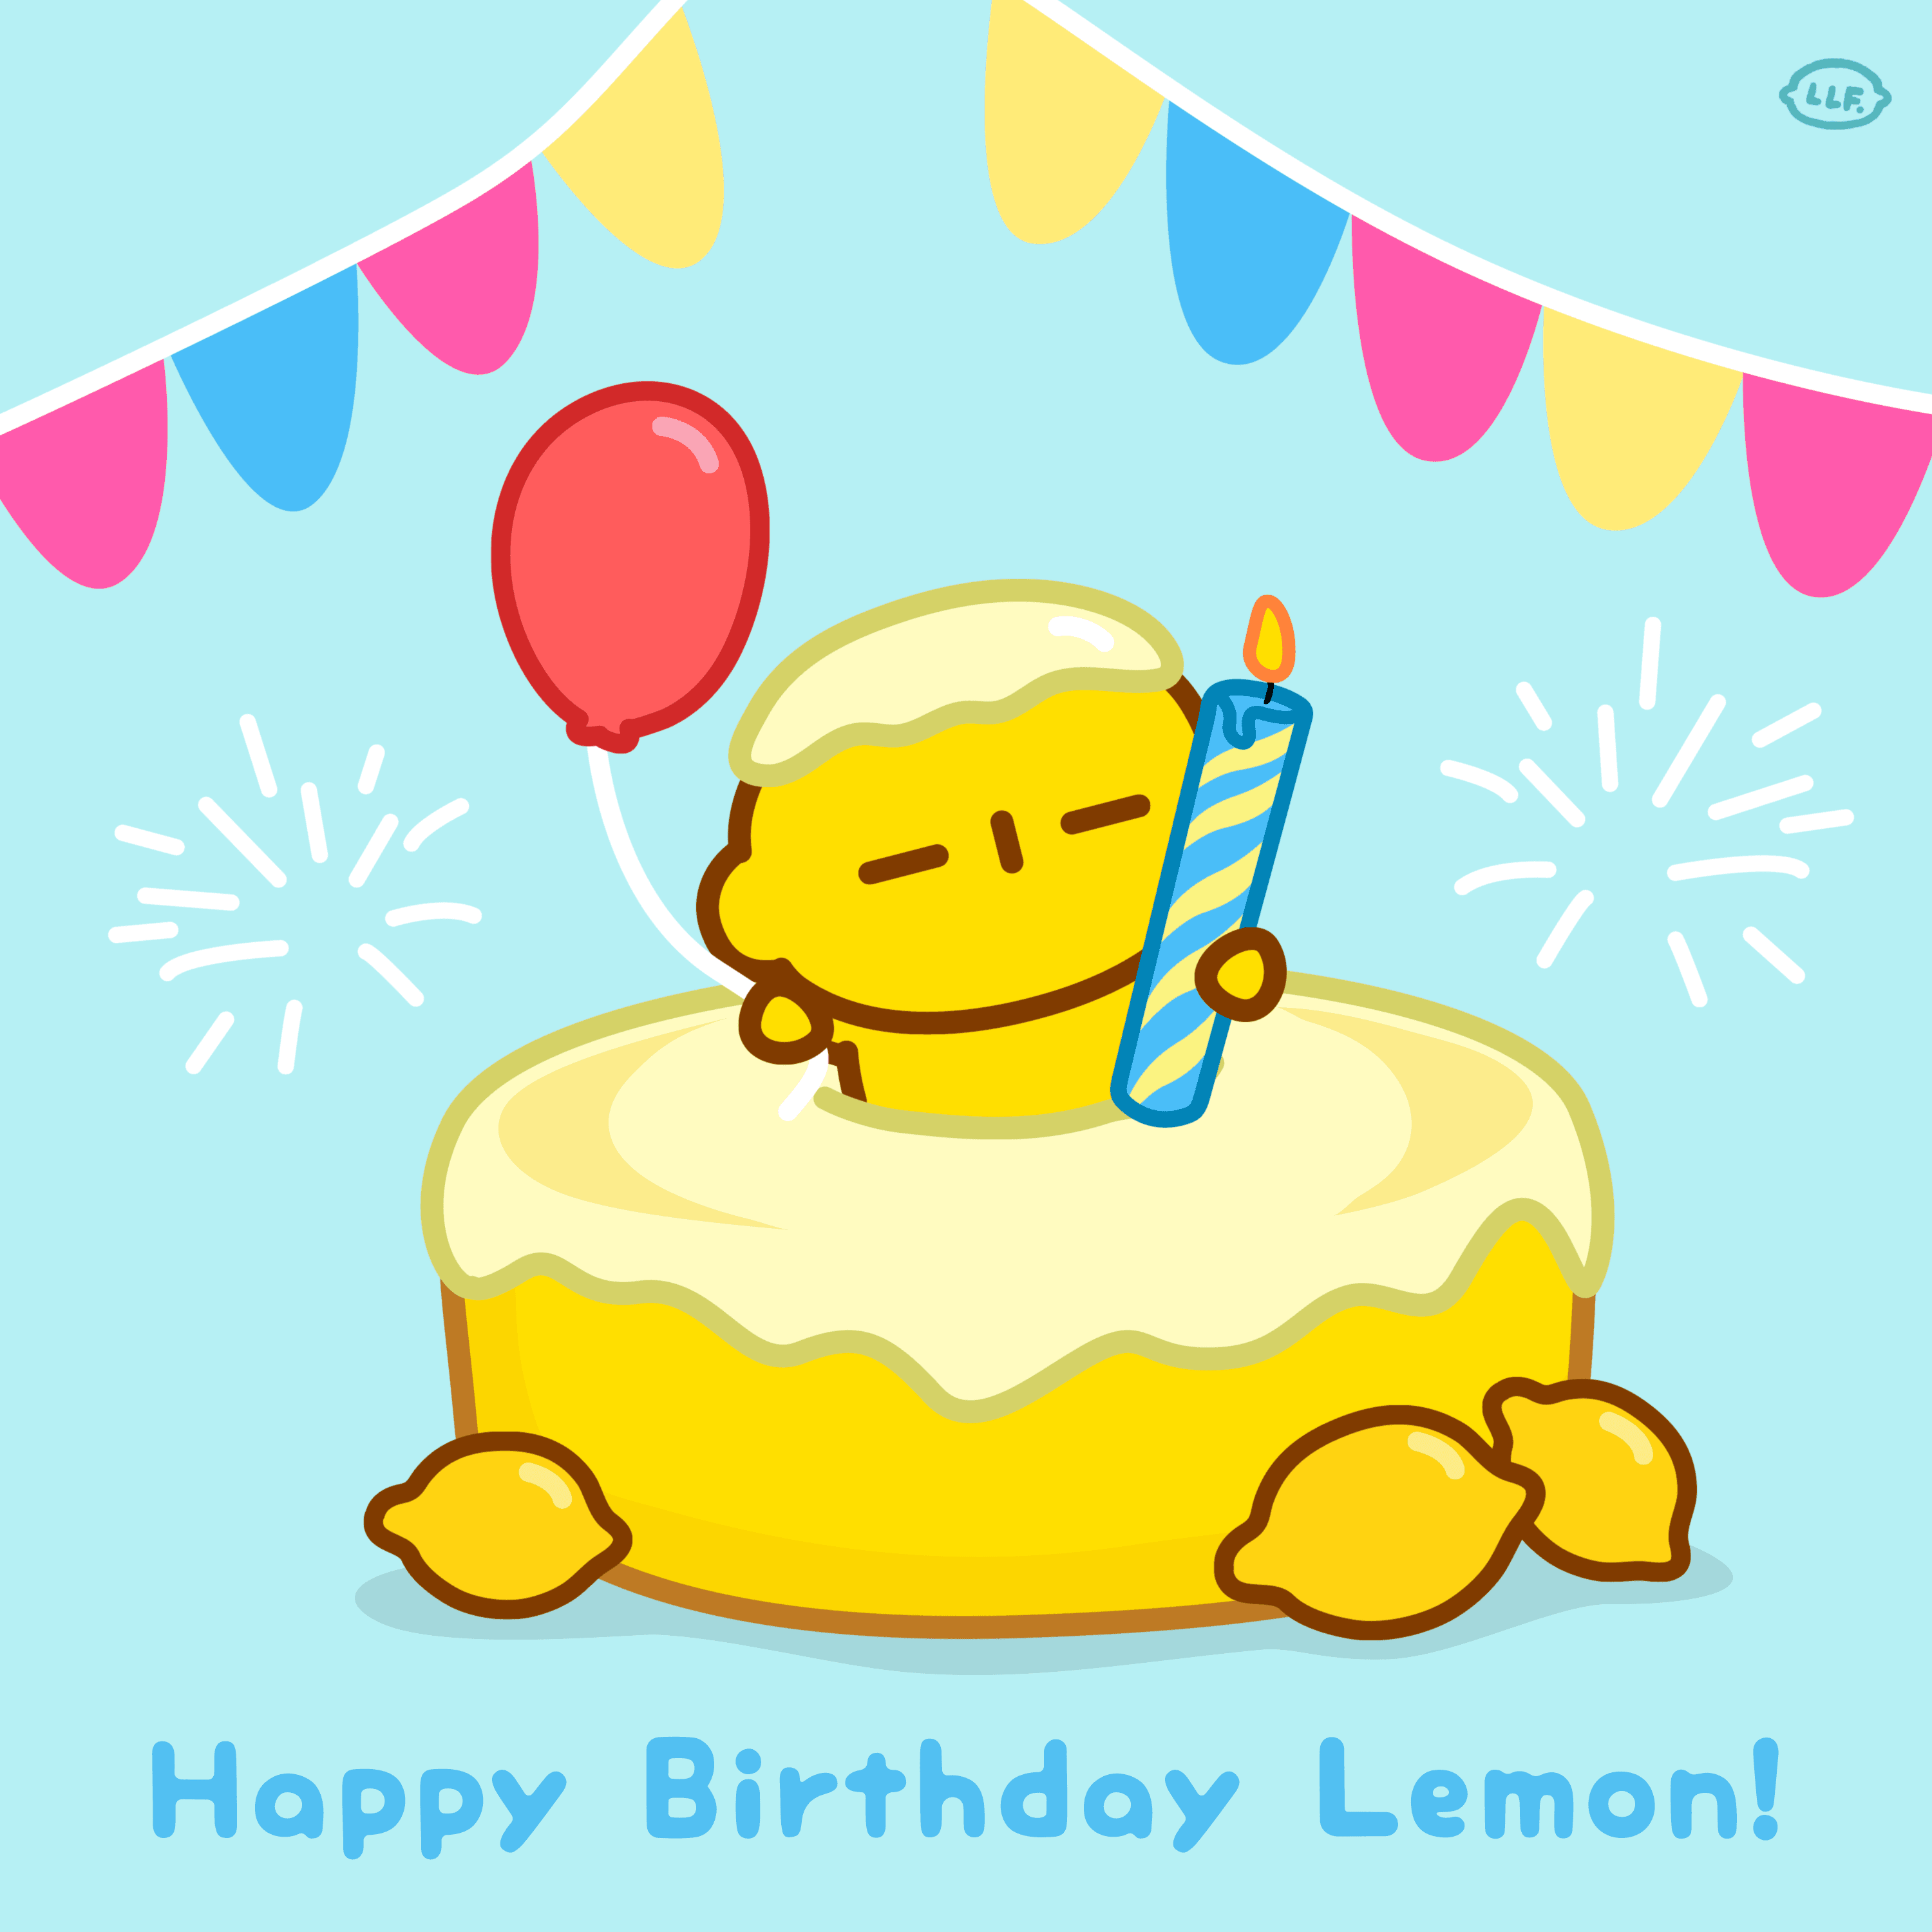 Happy Birthday Lemon!